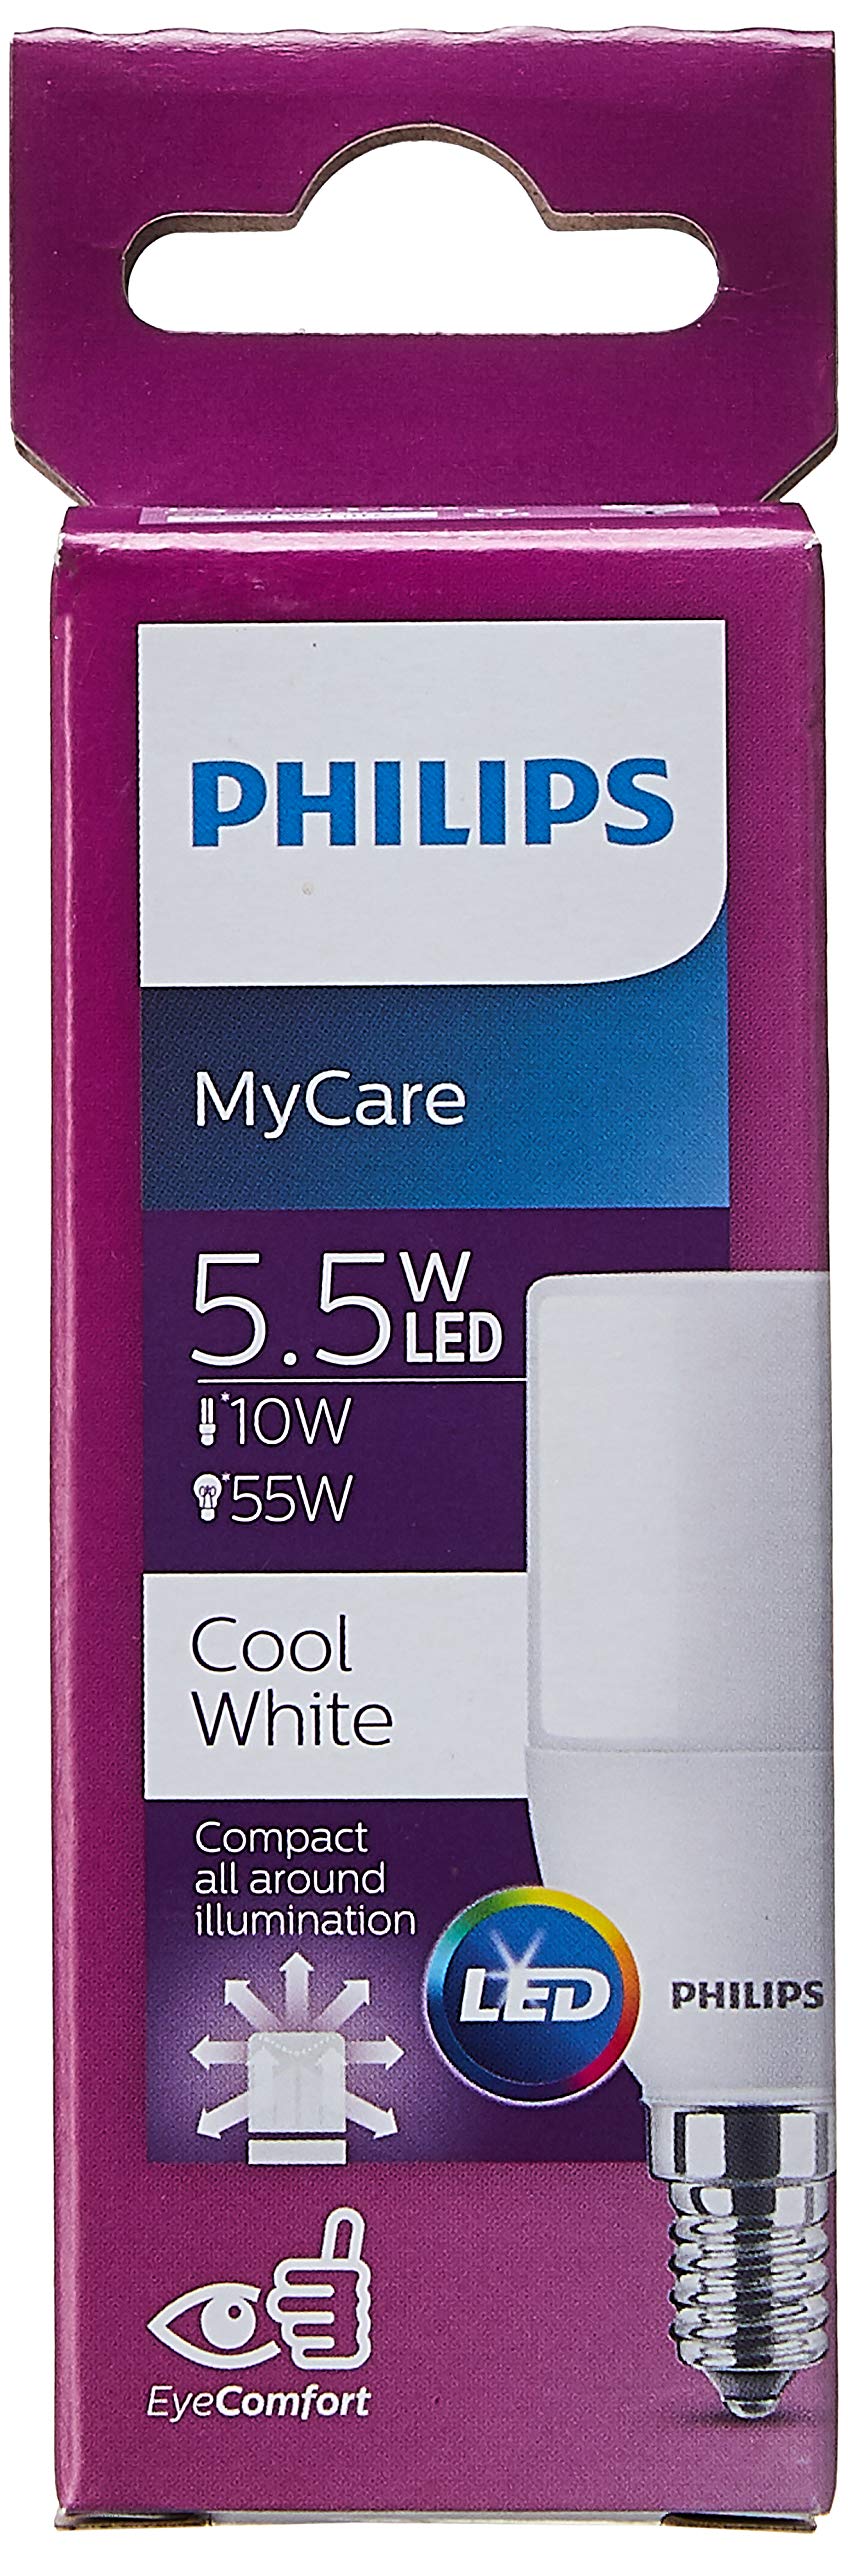 Philips 5.5W LED 600 Lumen Cool Daylight E14 Compact All Around Illumination EyeComfort